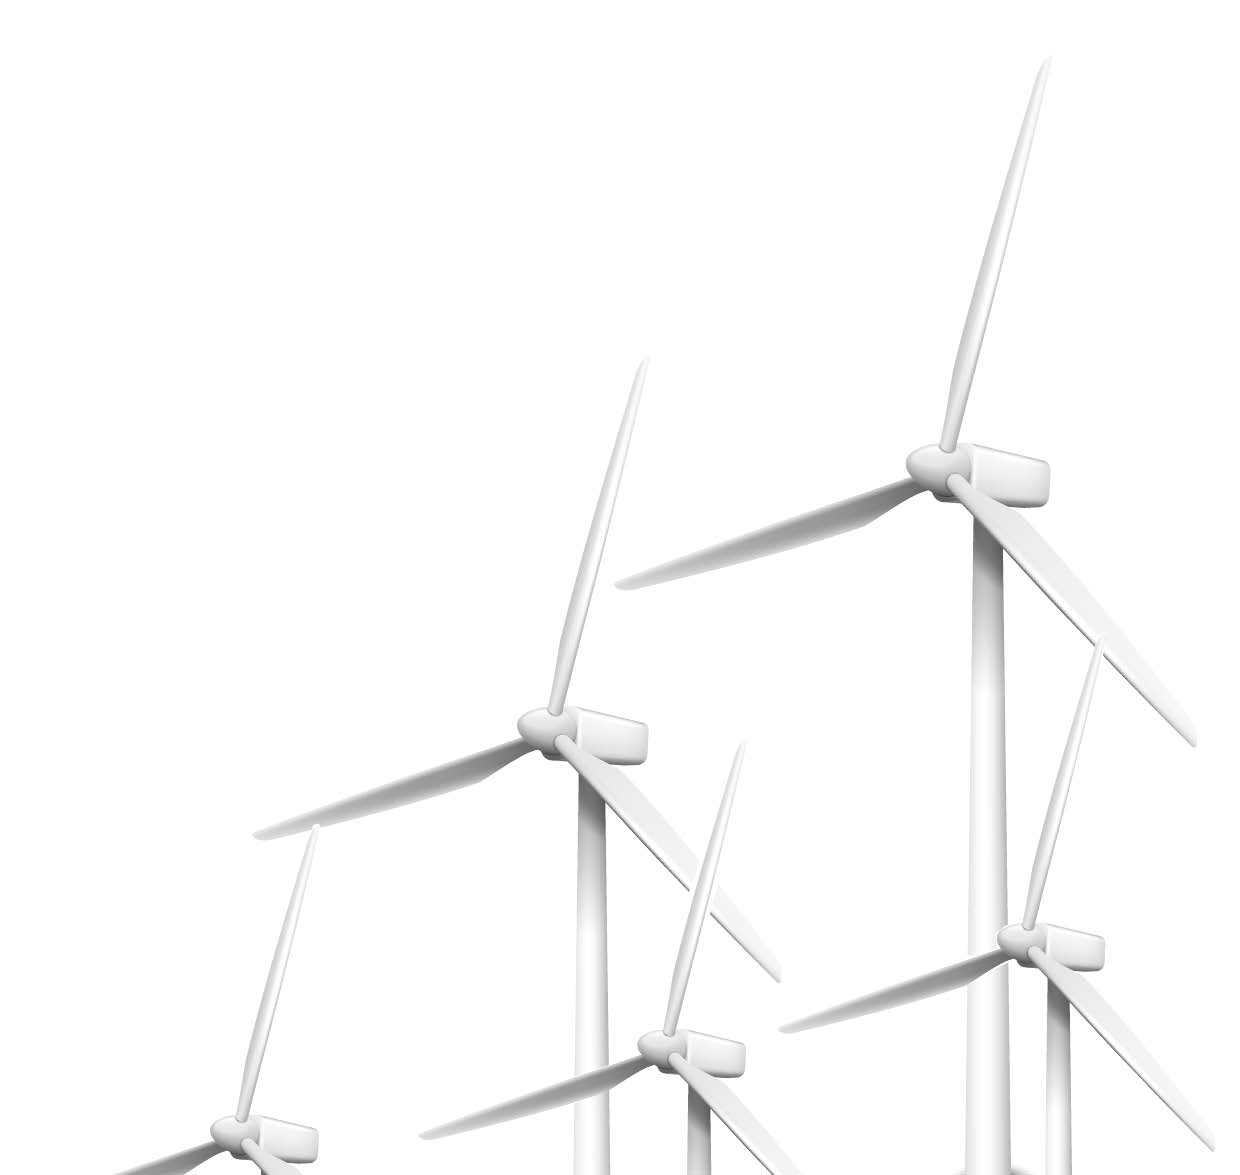 Electricity generating wind turbines